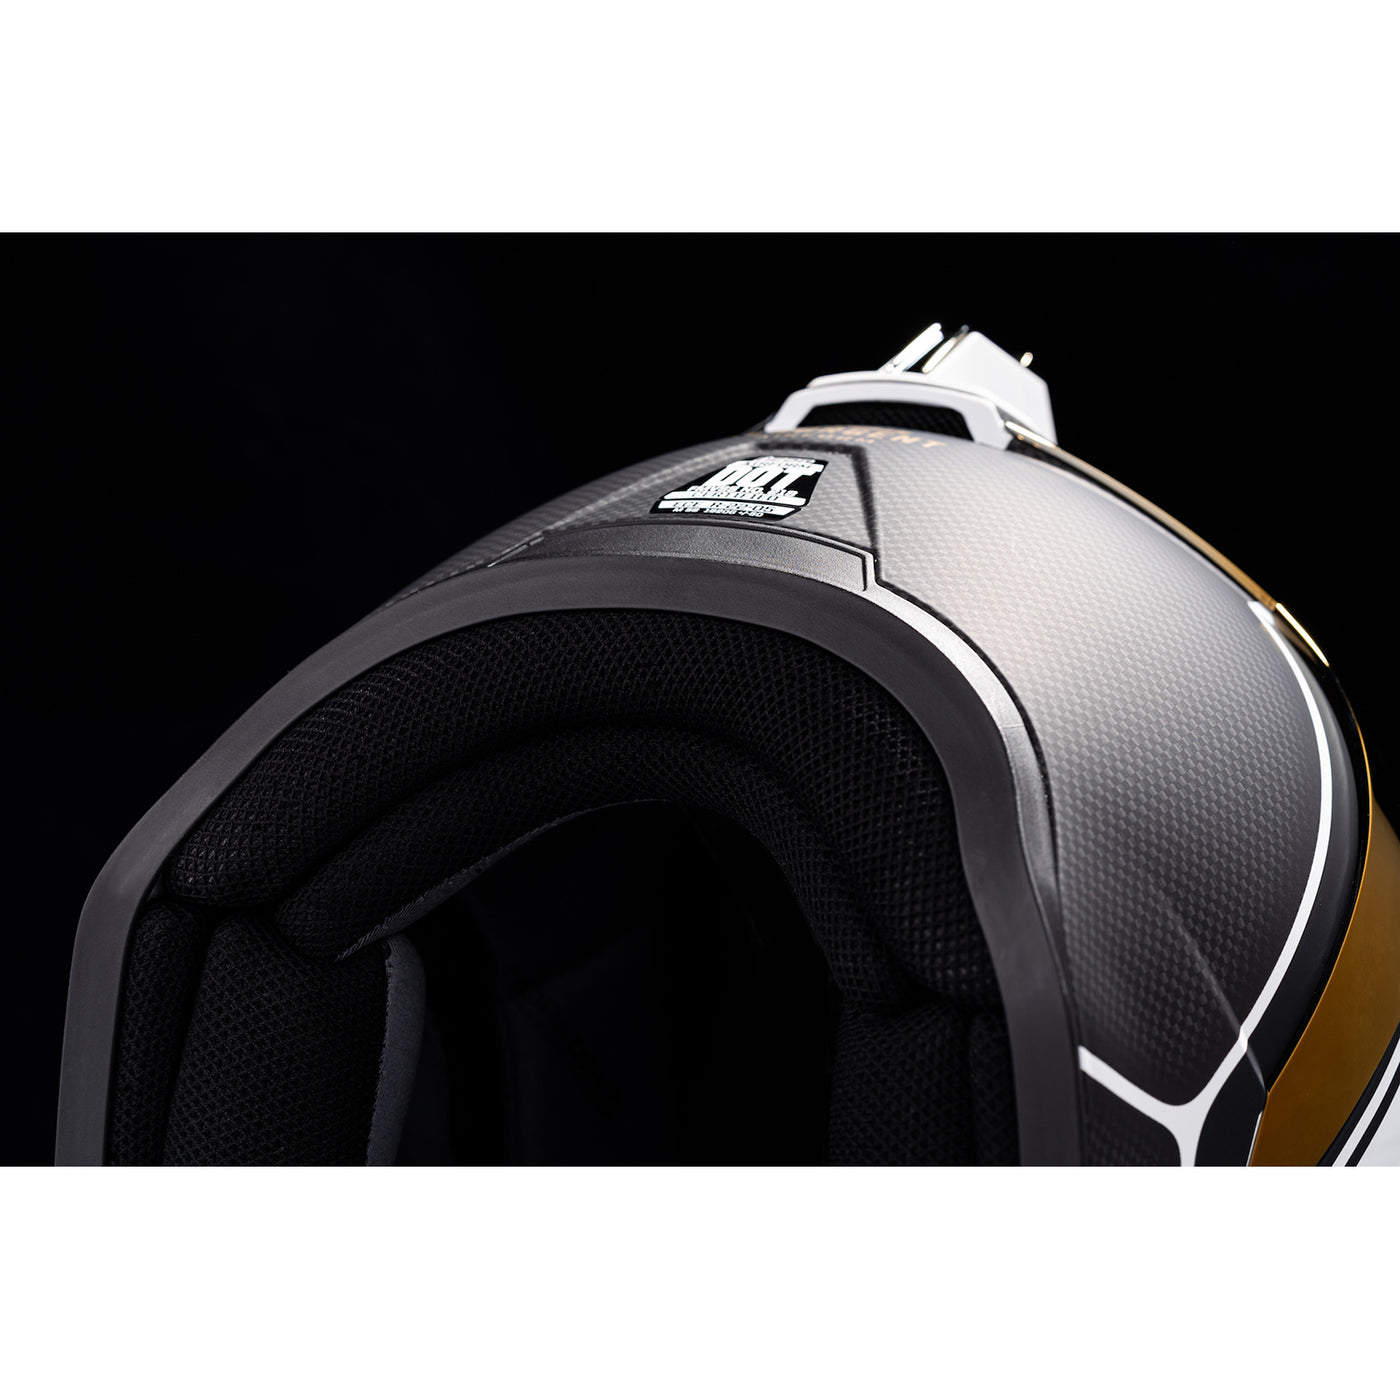 ICON Airform™ Resurgent Helmet